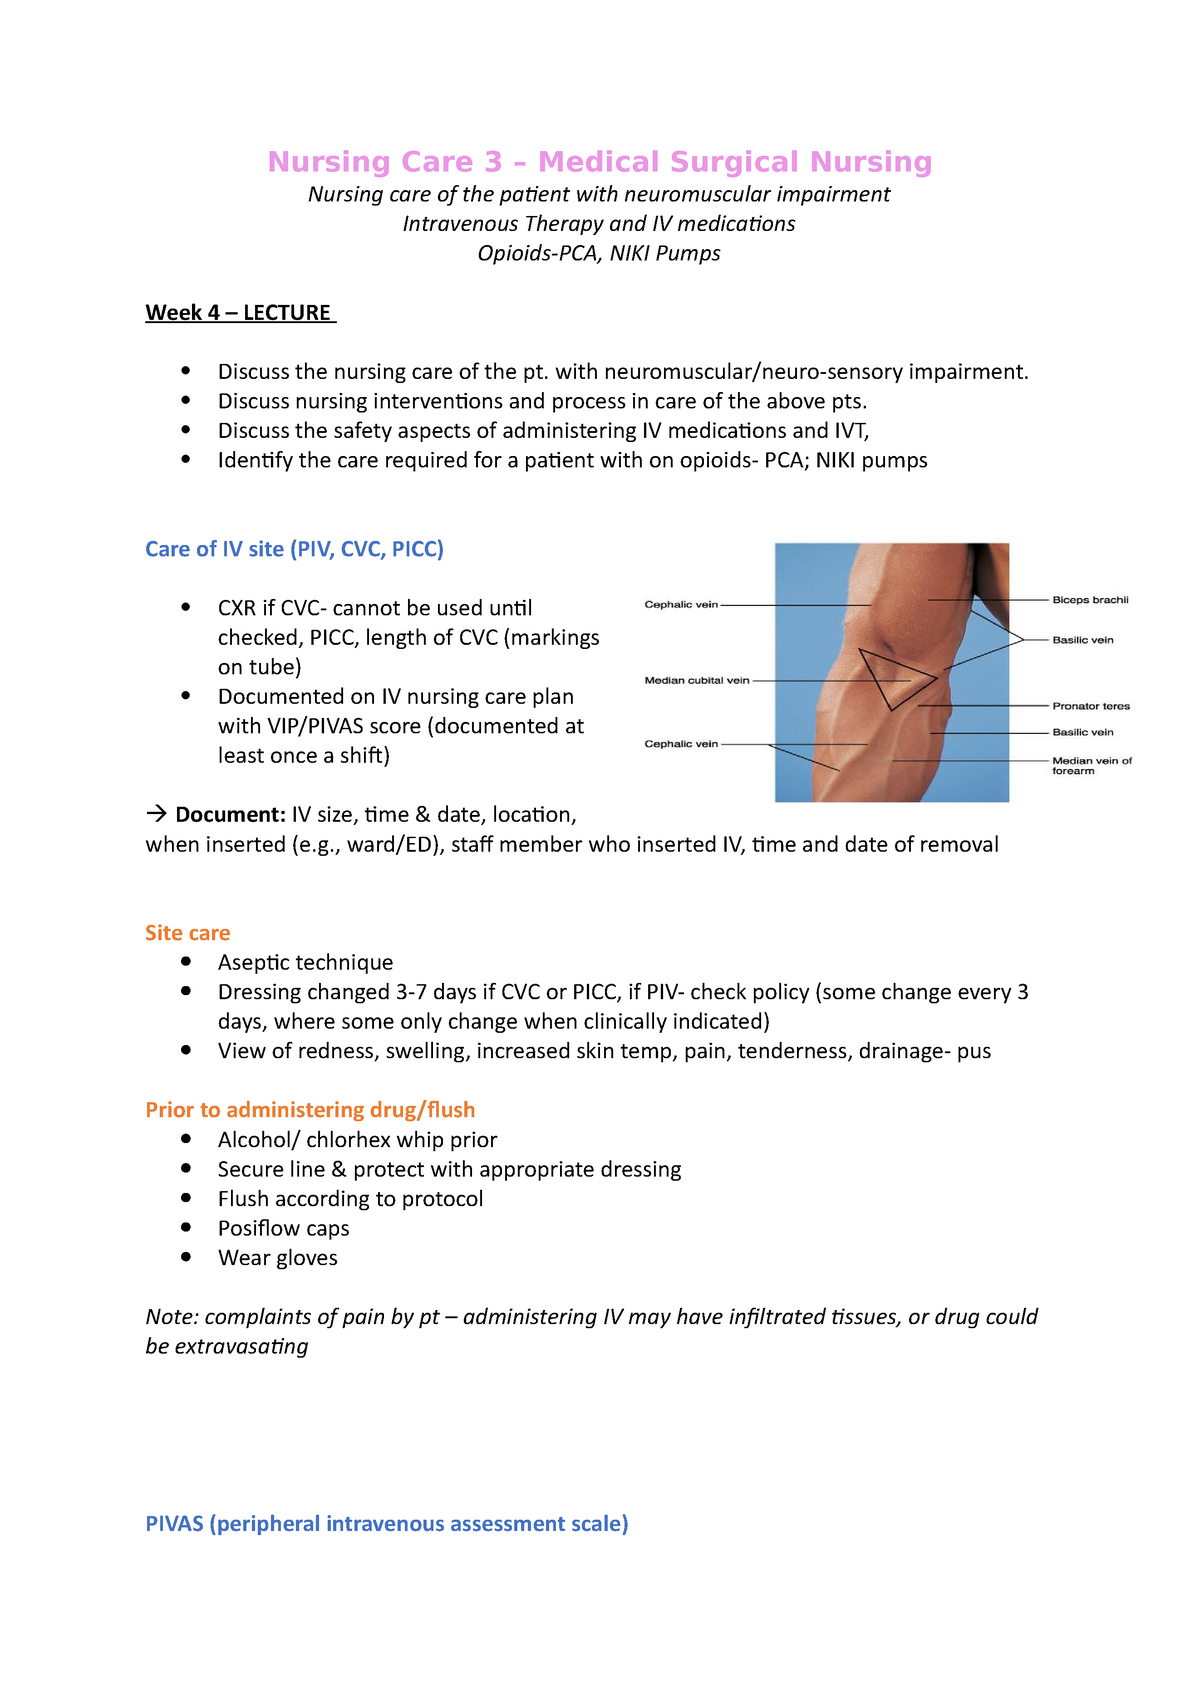 WK 4 - IV therepy & meds, nureomusclar impairments - Nursing Care 3 ...